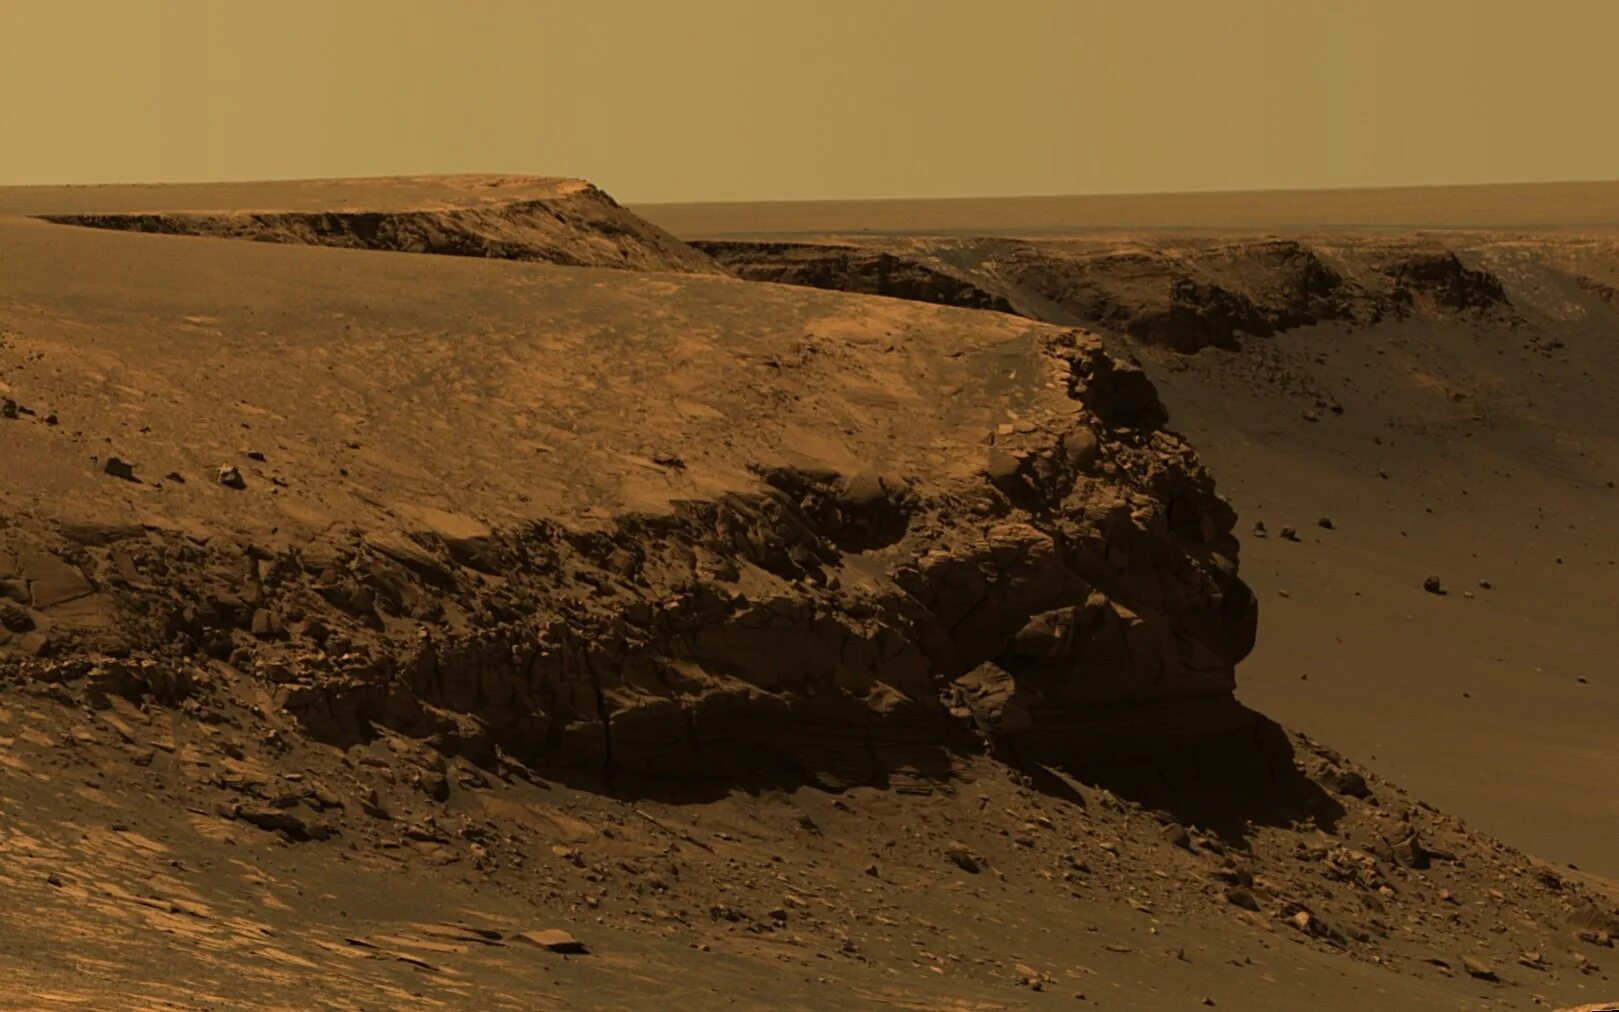 The other side of mars. Снимки планеты Марс с марсохода. Марс поверхность планеты с марсоходом. Марс снимок с марсохода. Марс снимки с марсохода настоящие.